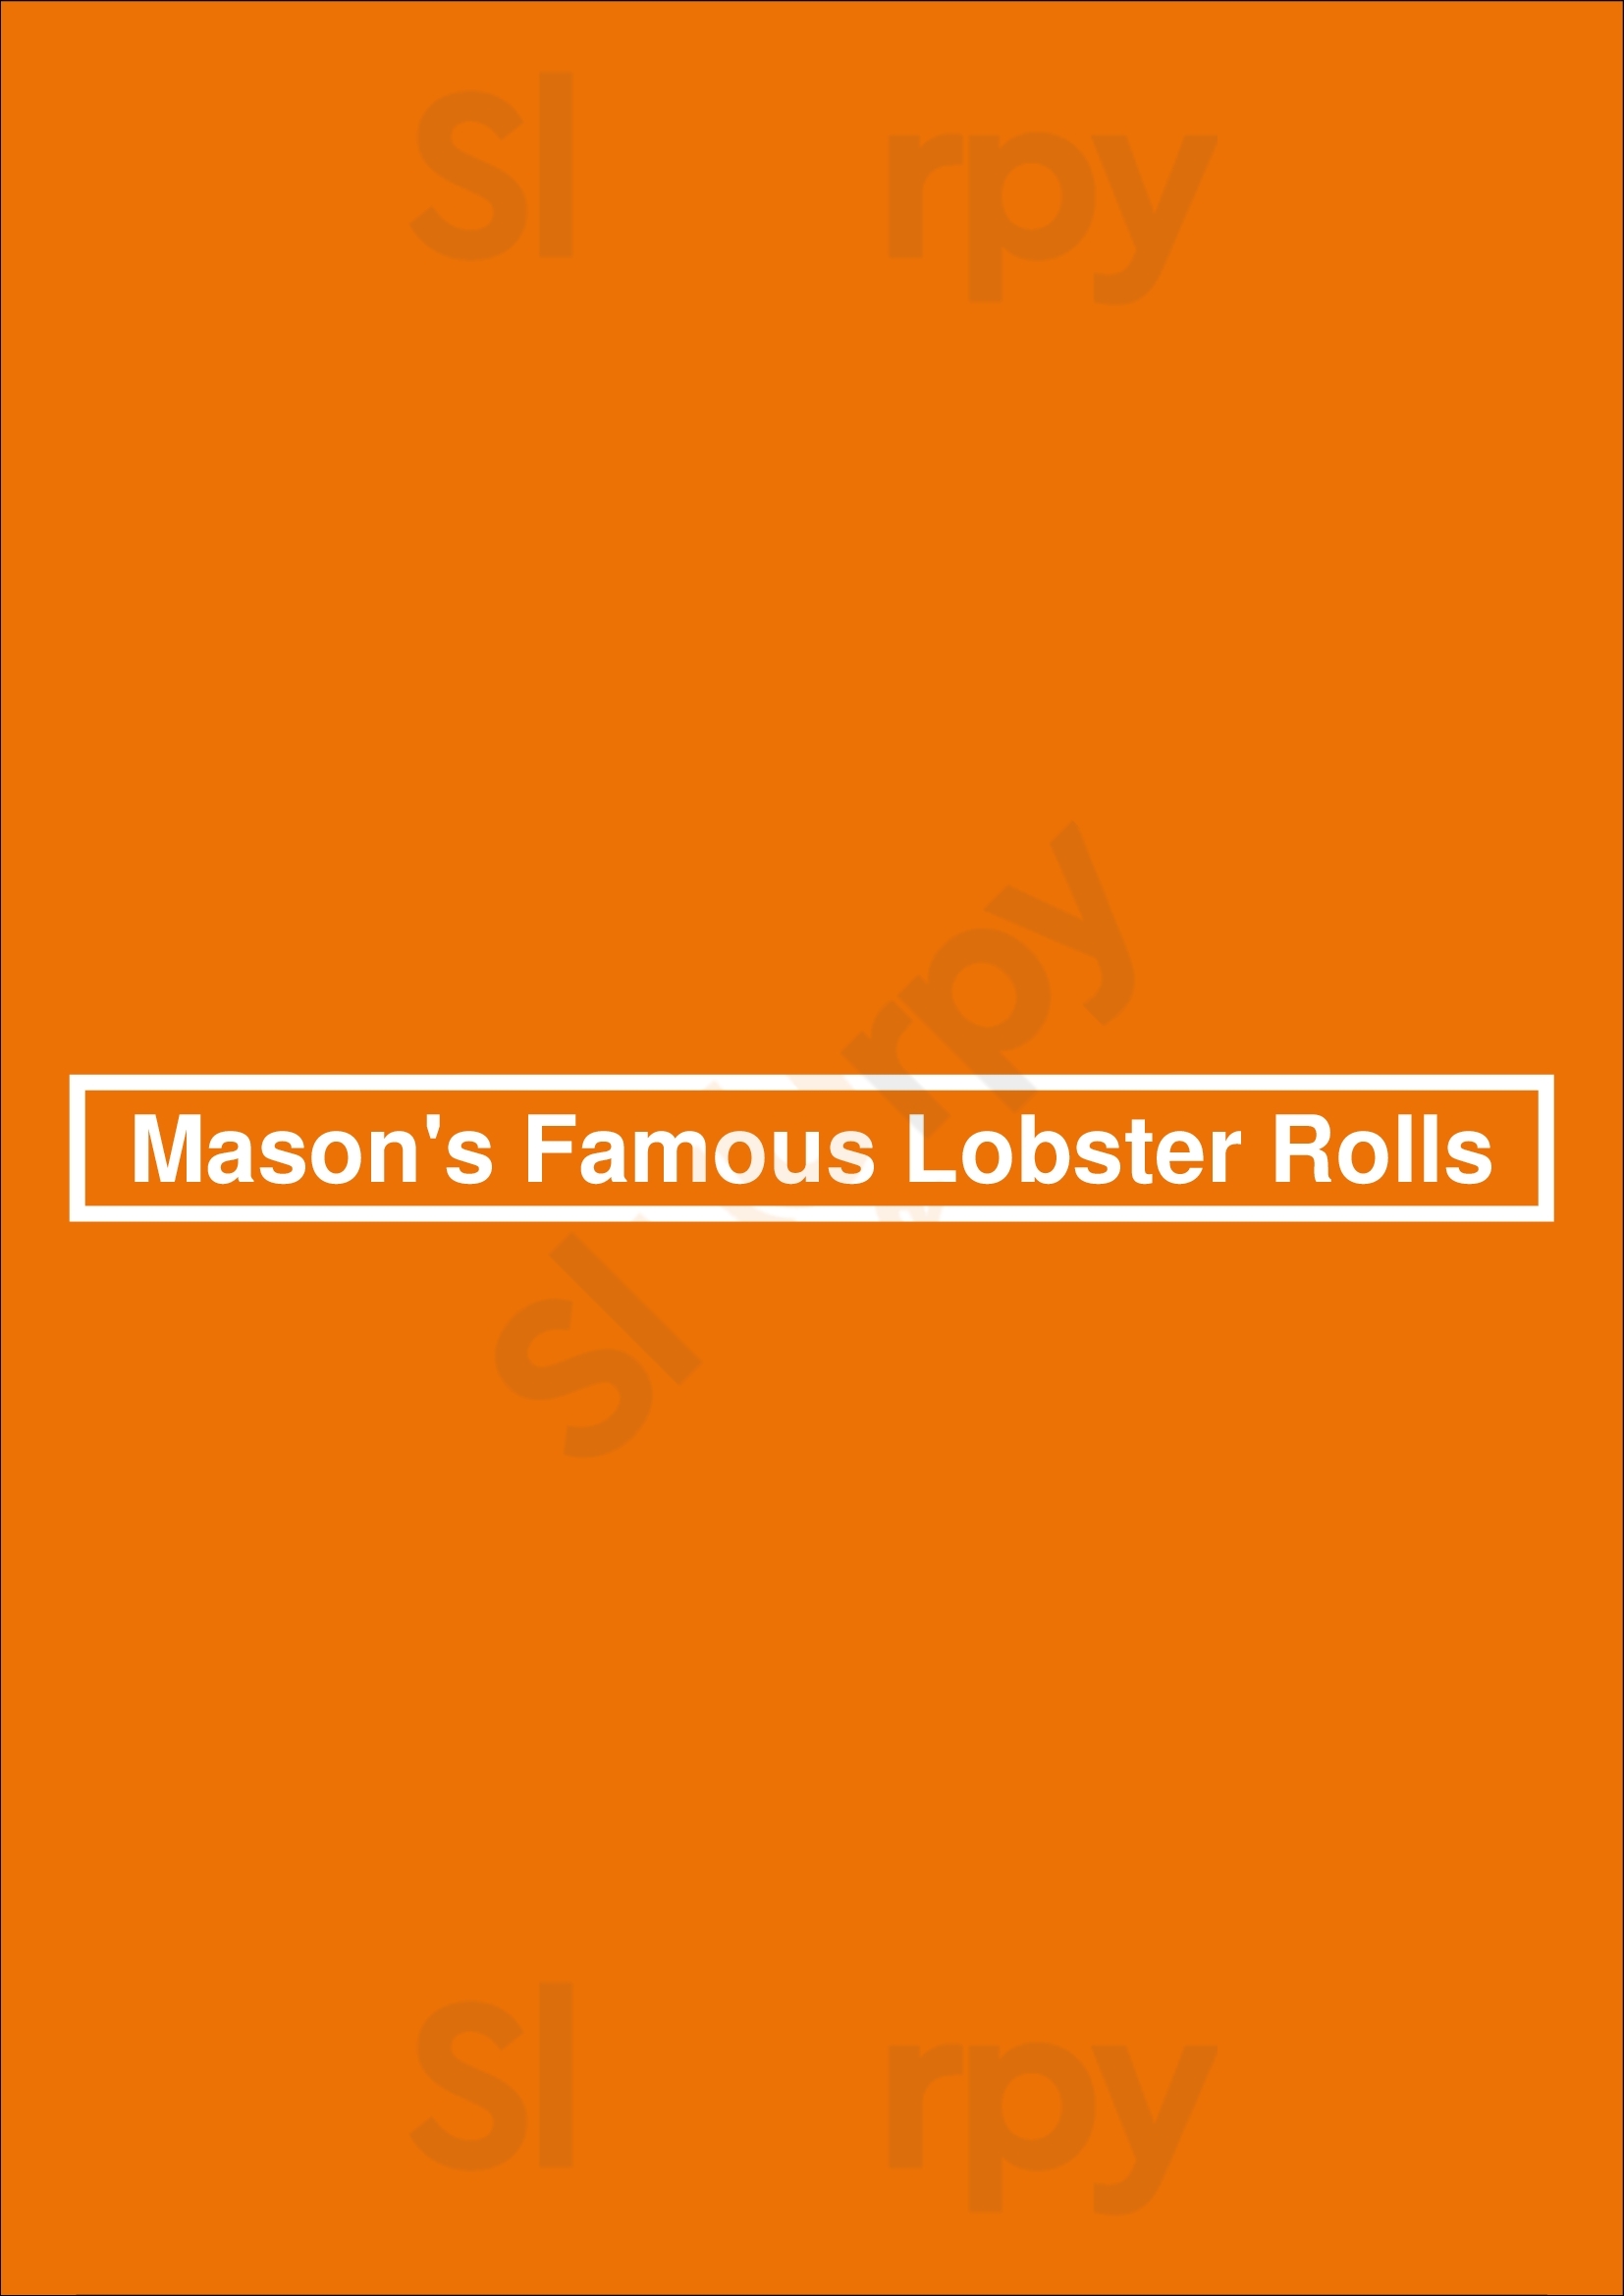 Mason's Famous Lobster Rolls Raleigh Menu - 1